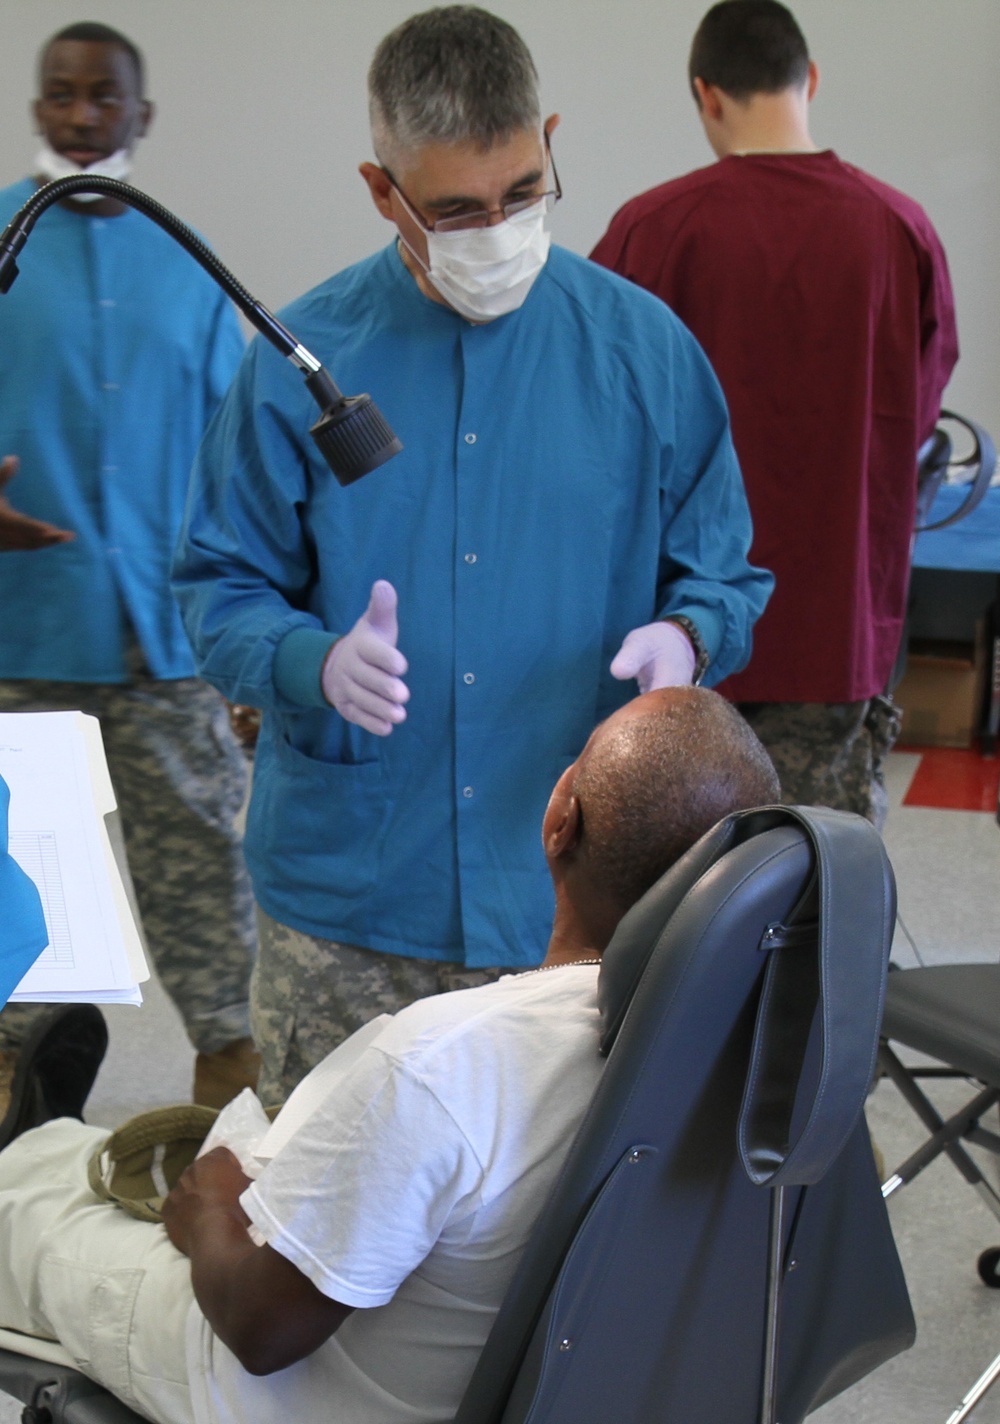 Dentist communicates dental health to civilian patient